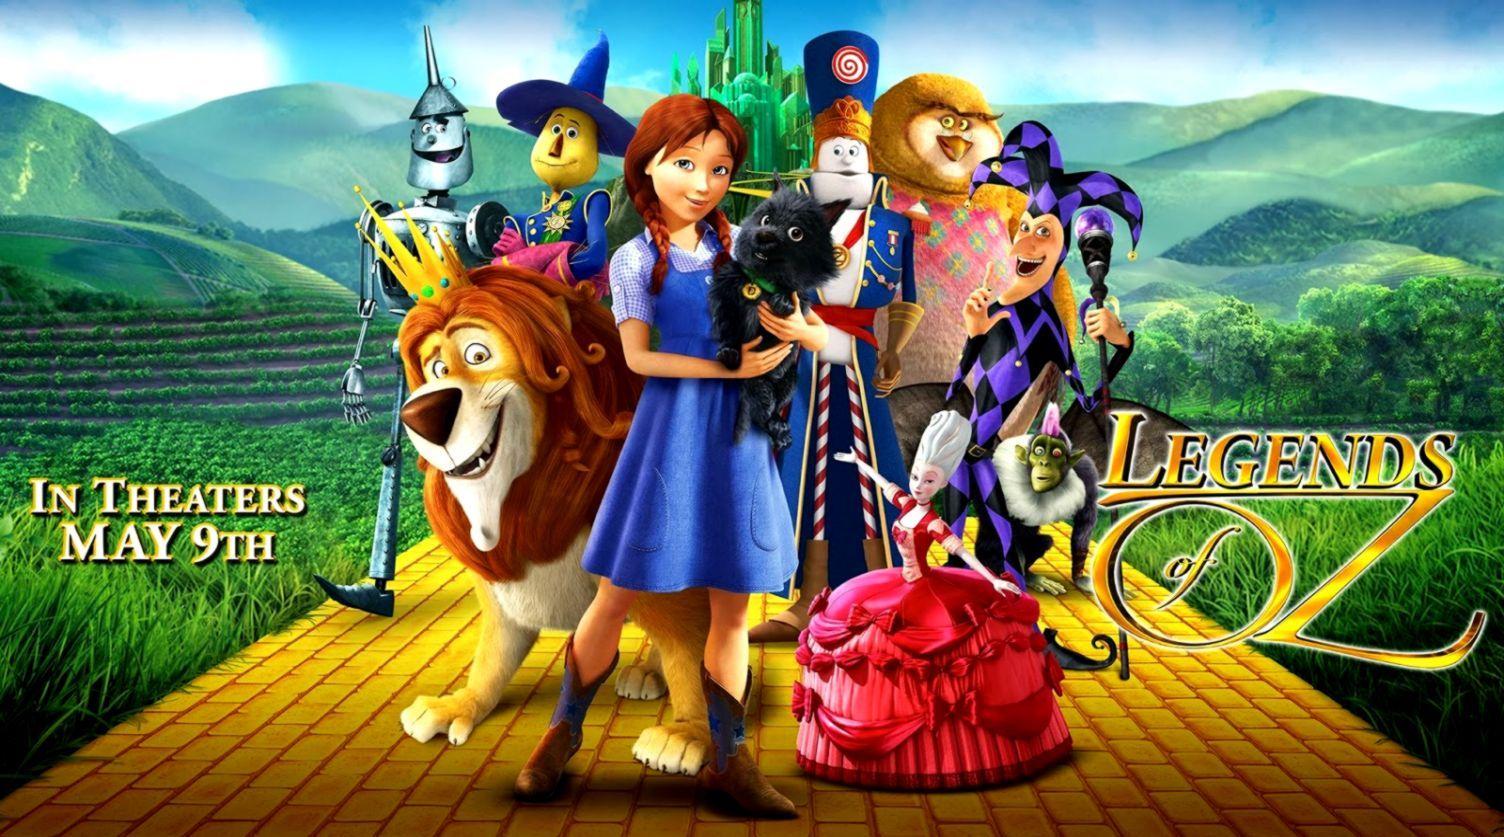 Legends Oz Dorothys Return Cartoon Movie HD 1080p wallpaper